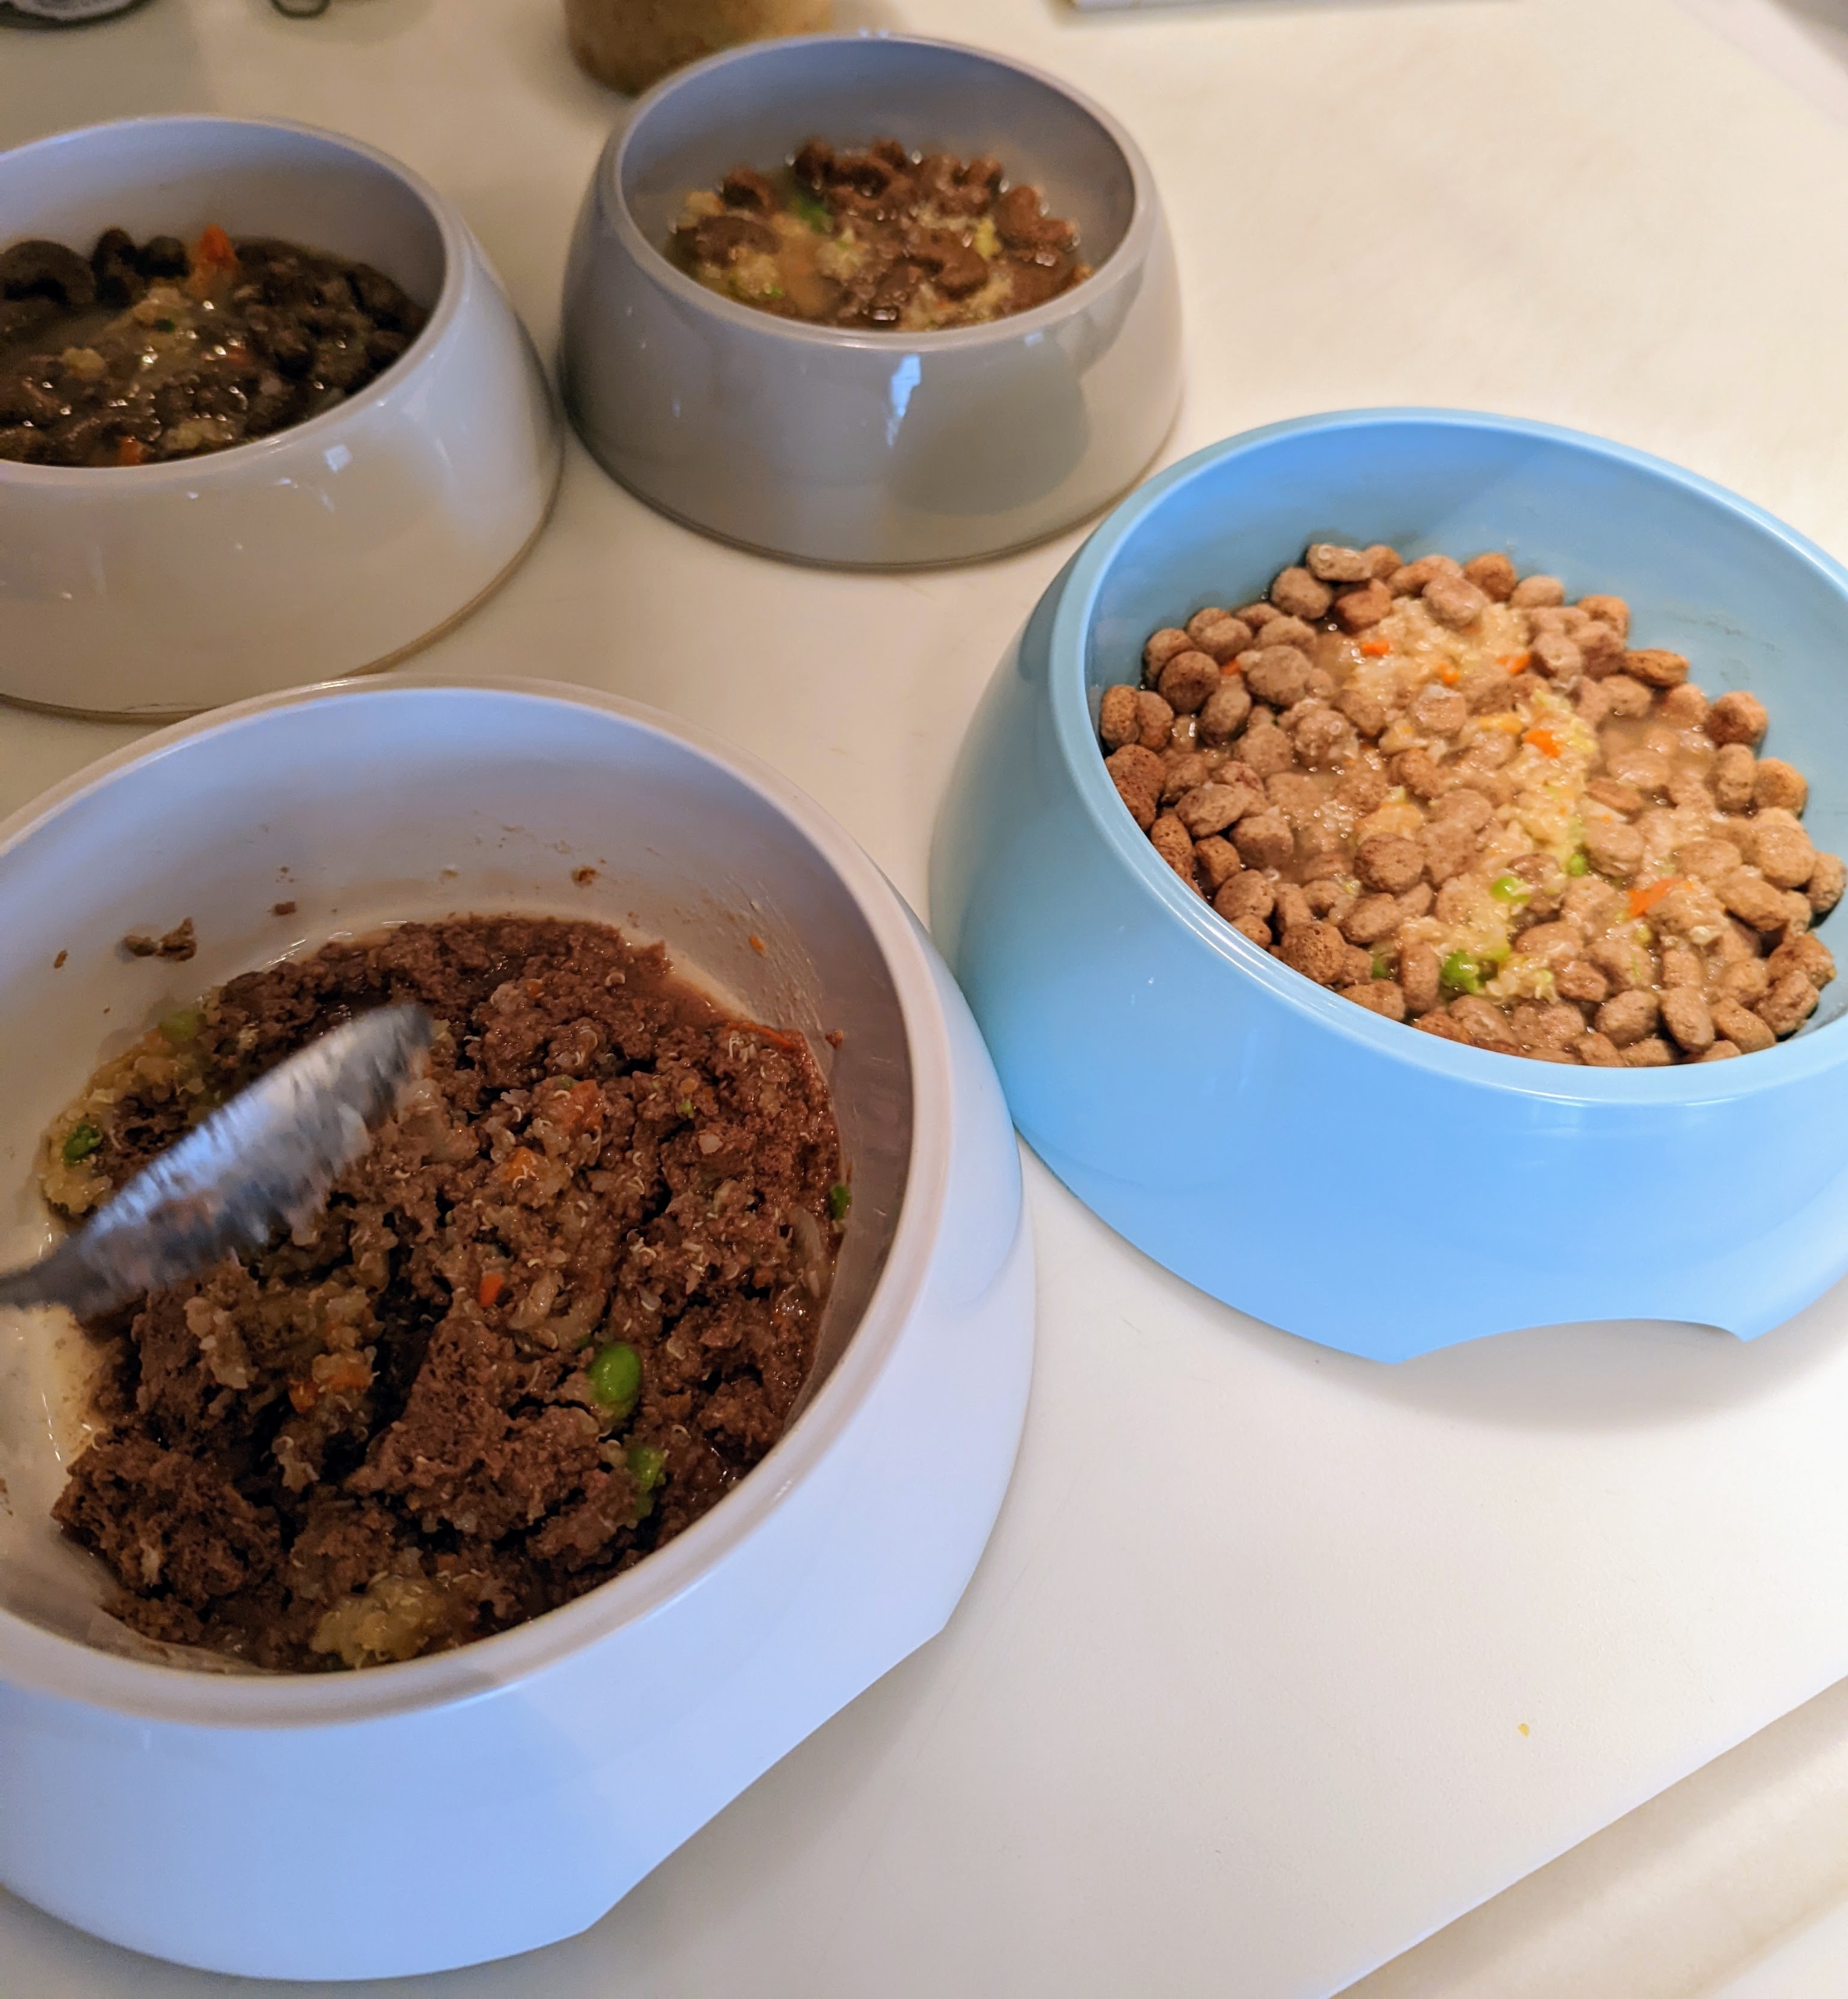 Preparing Food for My Dogs - The Martha Stewart Blog